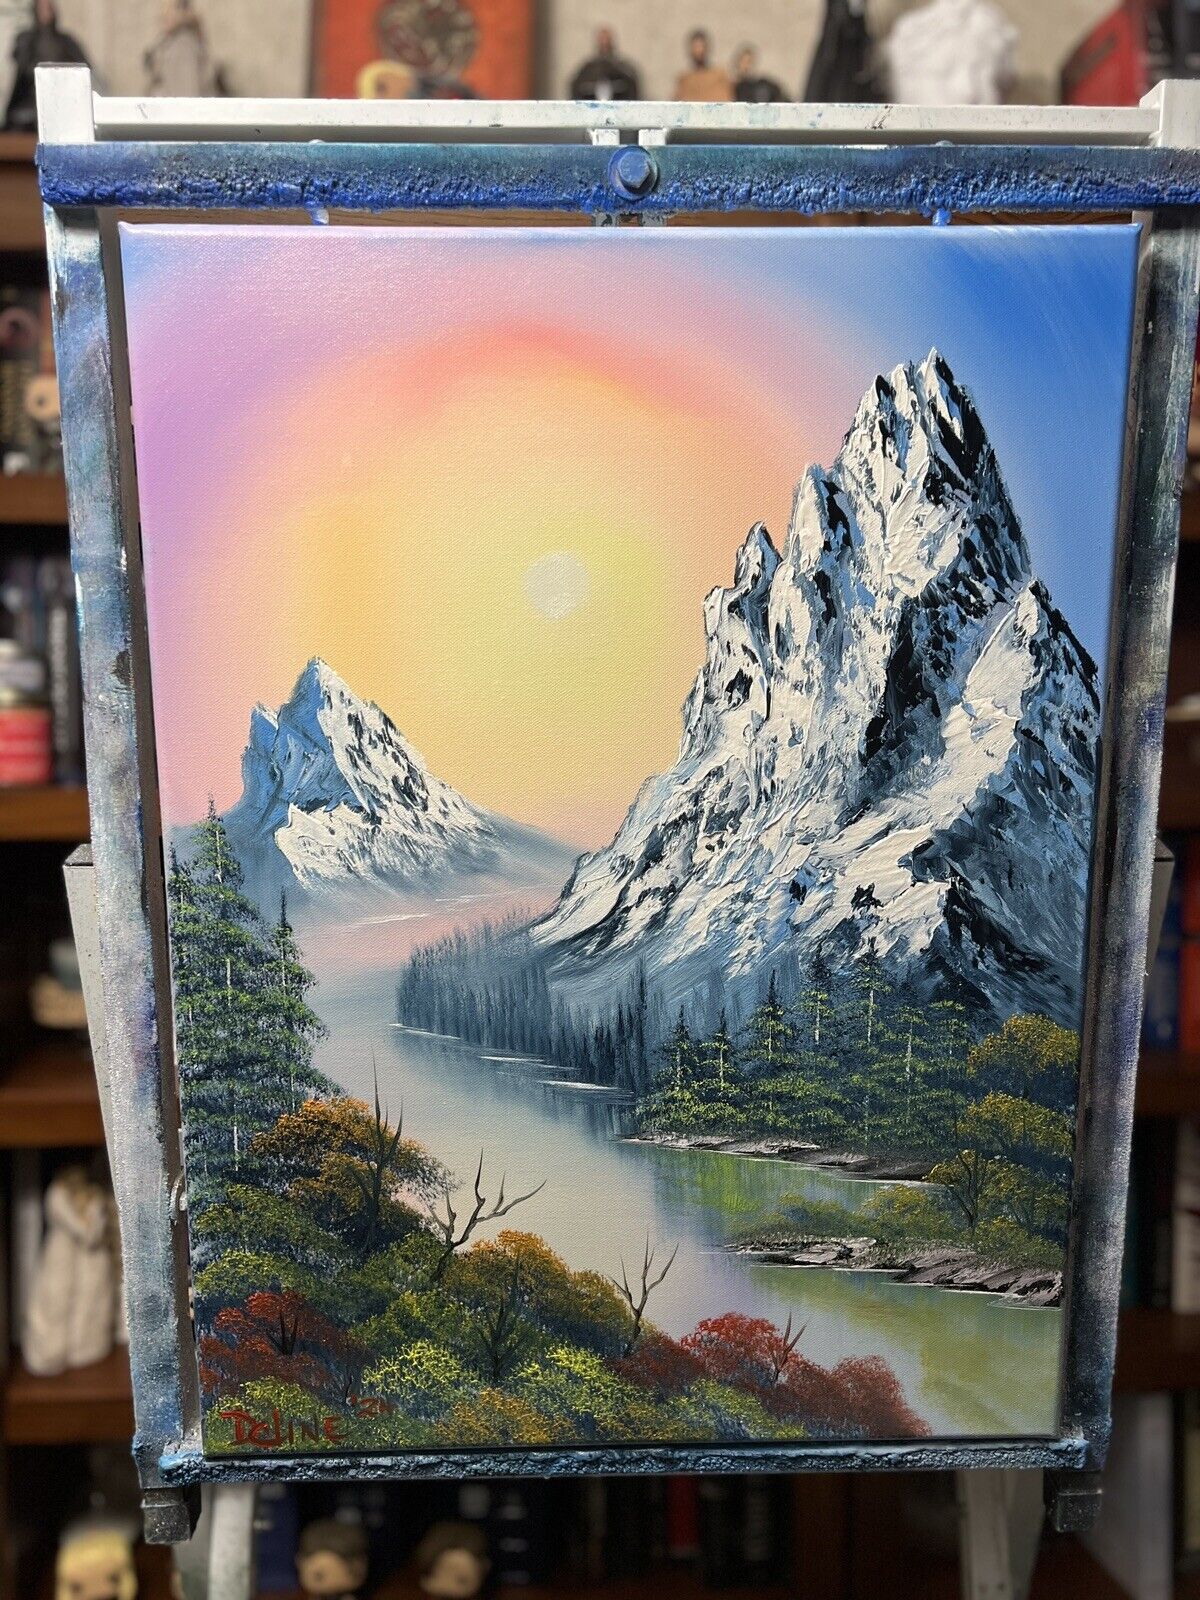 Original Oil Painting 18x24 “Mountain View Dawn” Art/Landscape (Bob Ross Style)